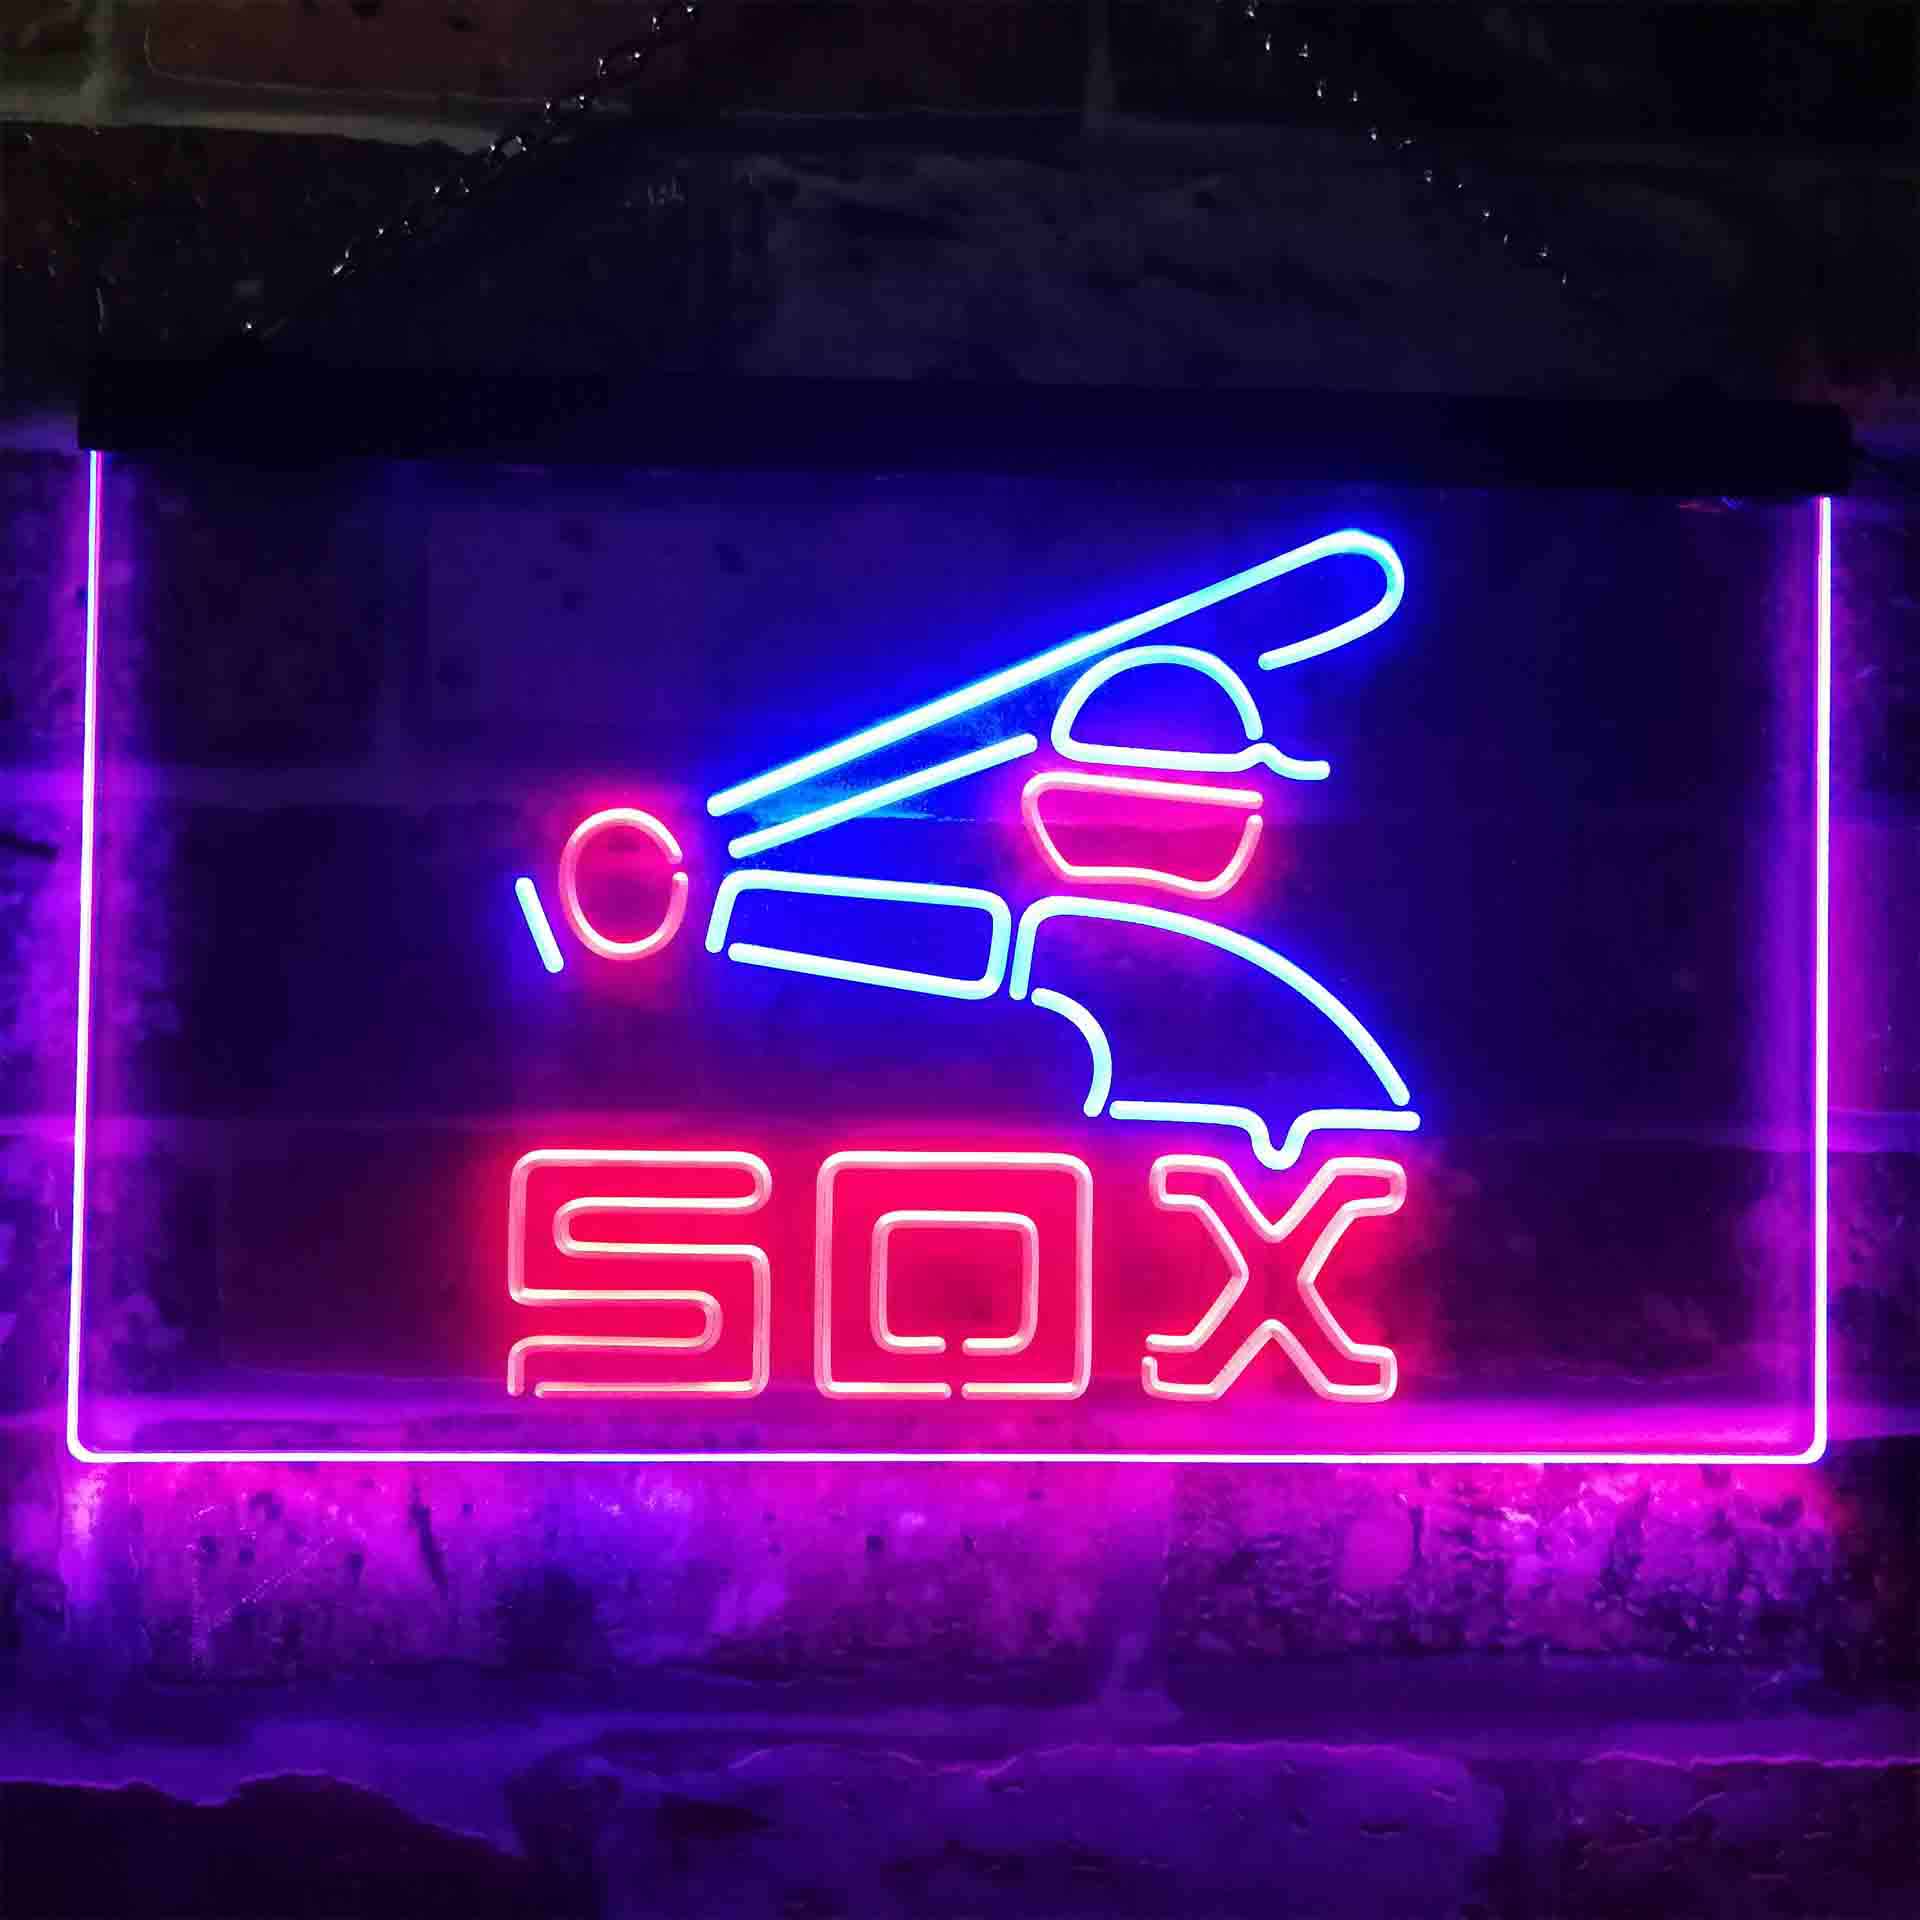 Chicago White League Club Soxs Souvenir Throwback LED Neon Sign